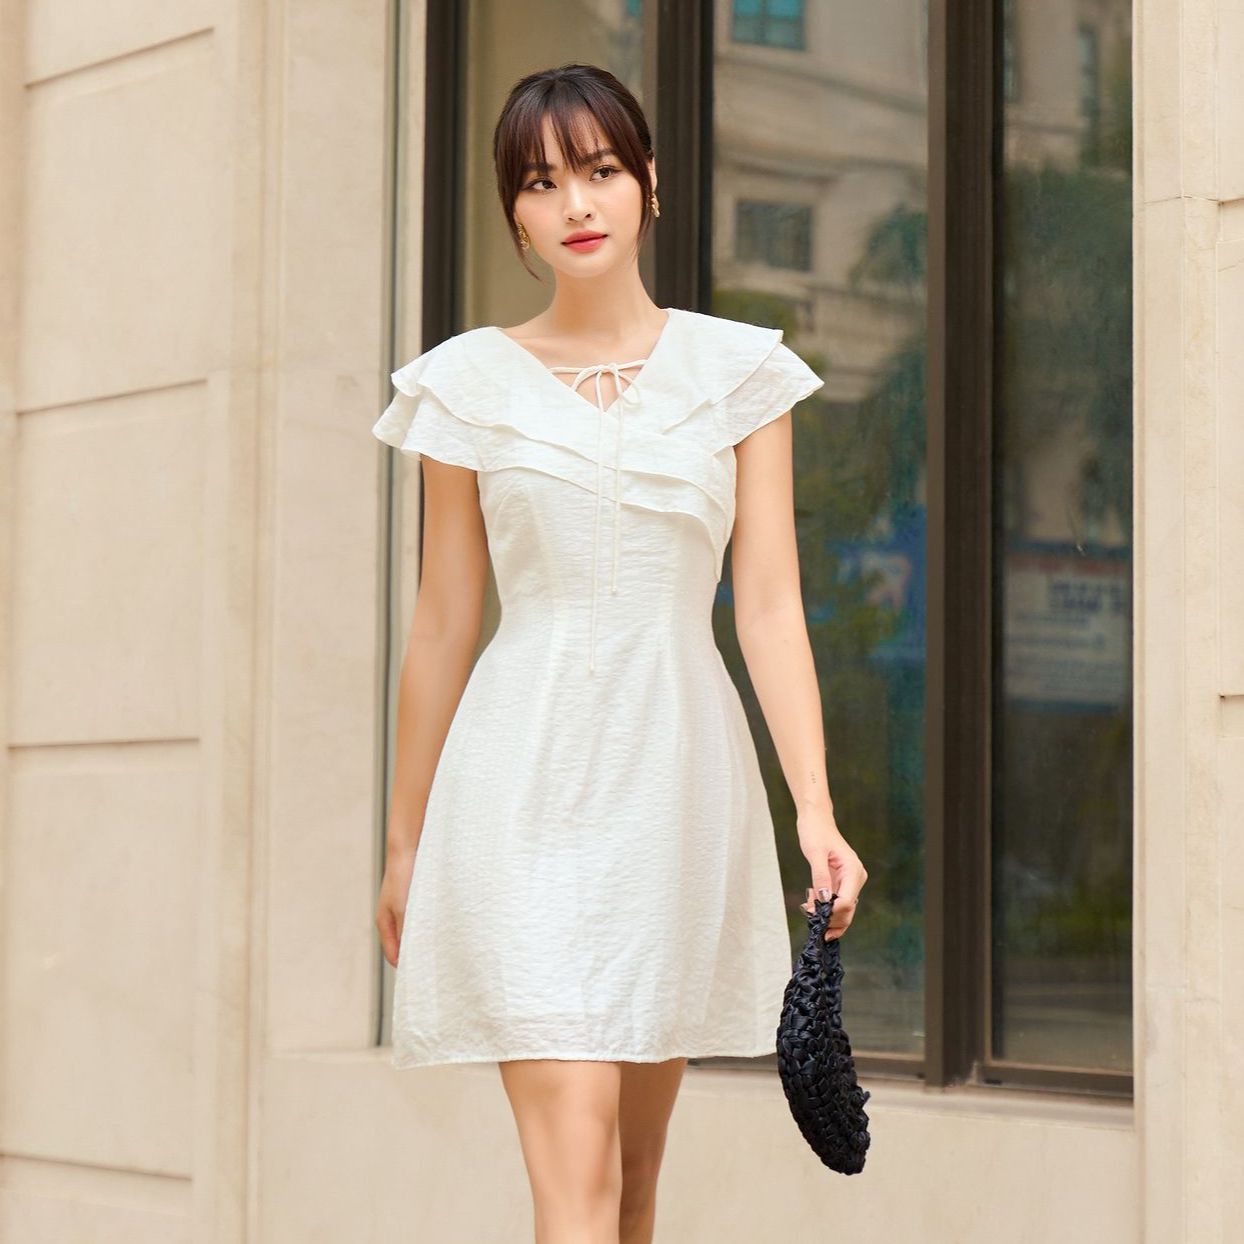 Chỉ 12/12 Sale upto 50% Voucher 15% OLV - Đầm Elysia Ruffle White Dress